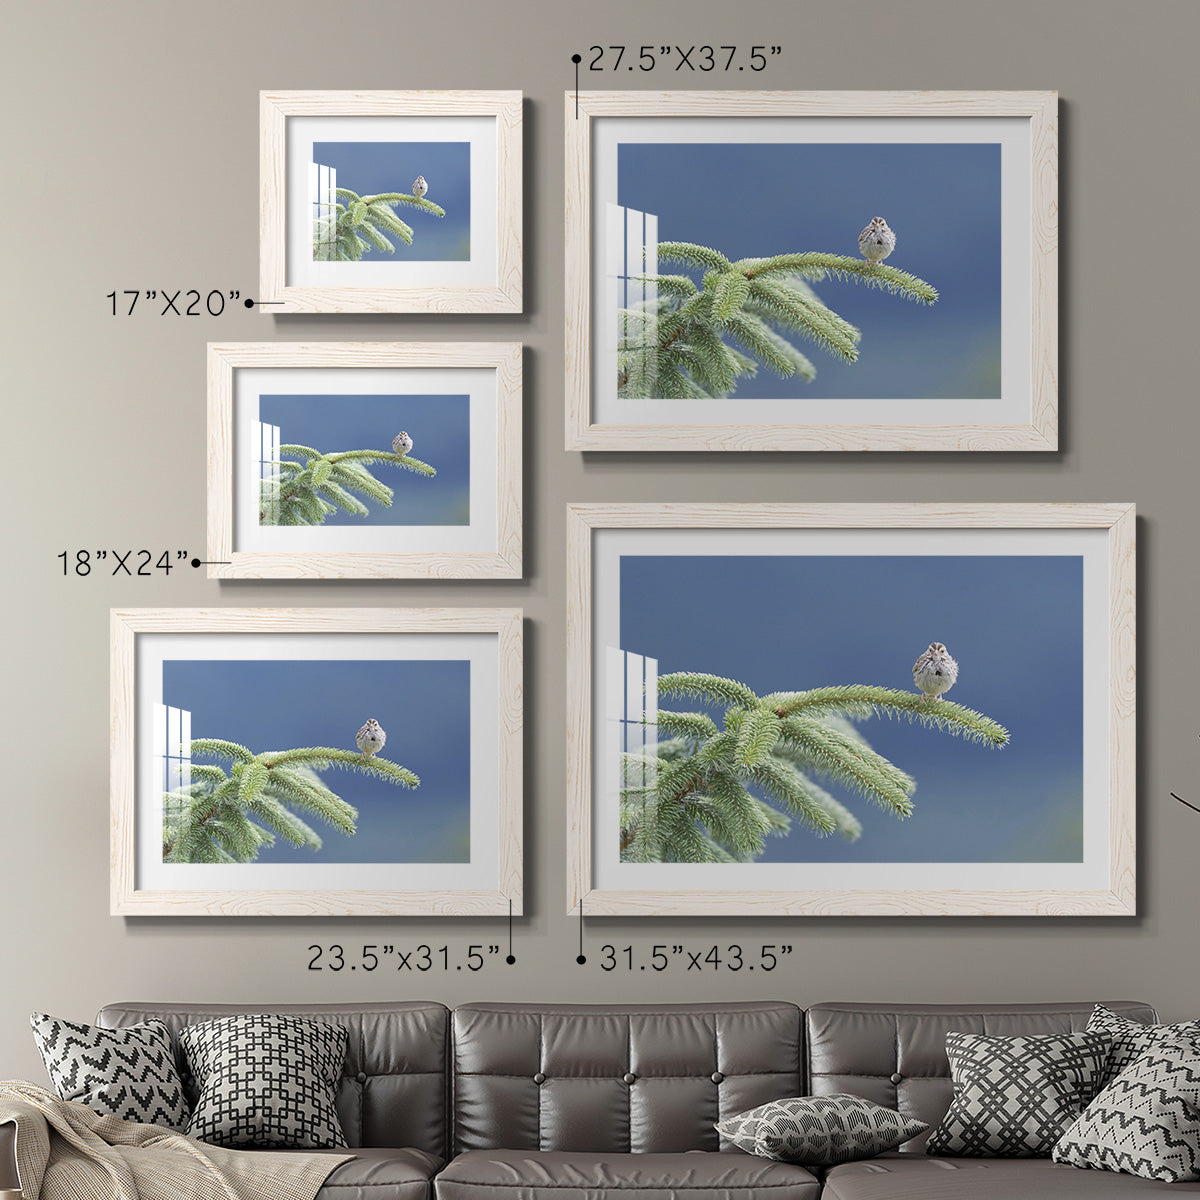 Evergreen Perch-Premium Framed Print - Ready to Hang